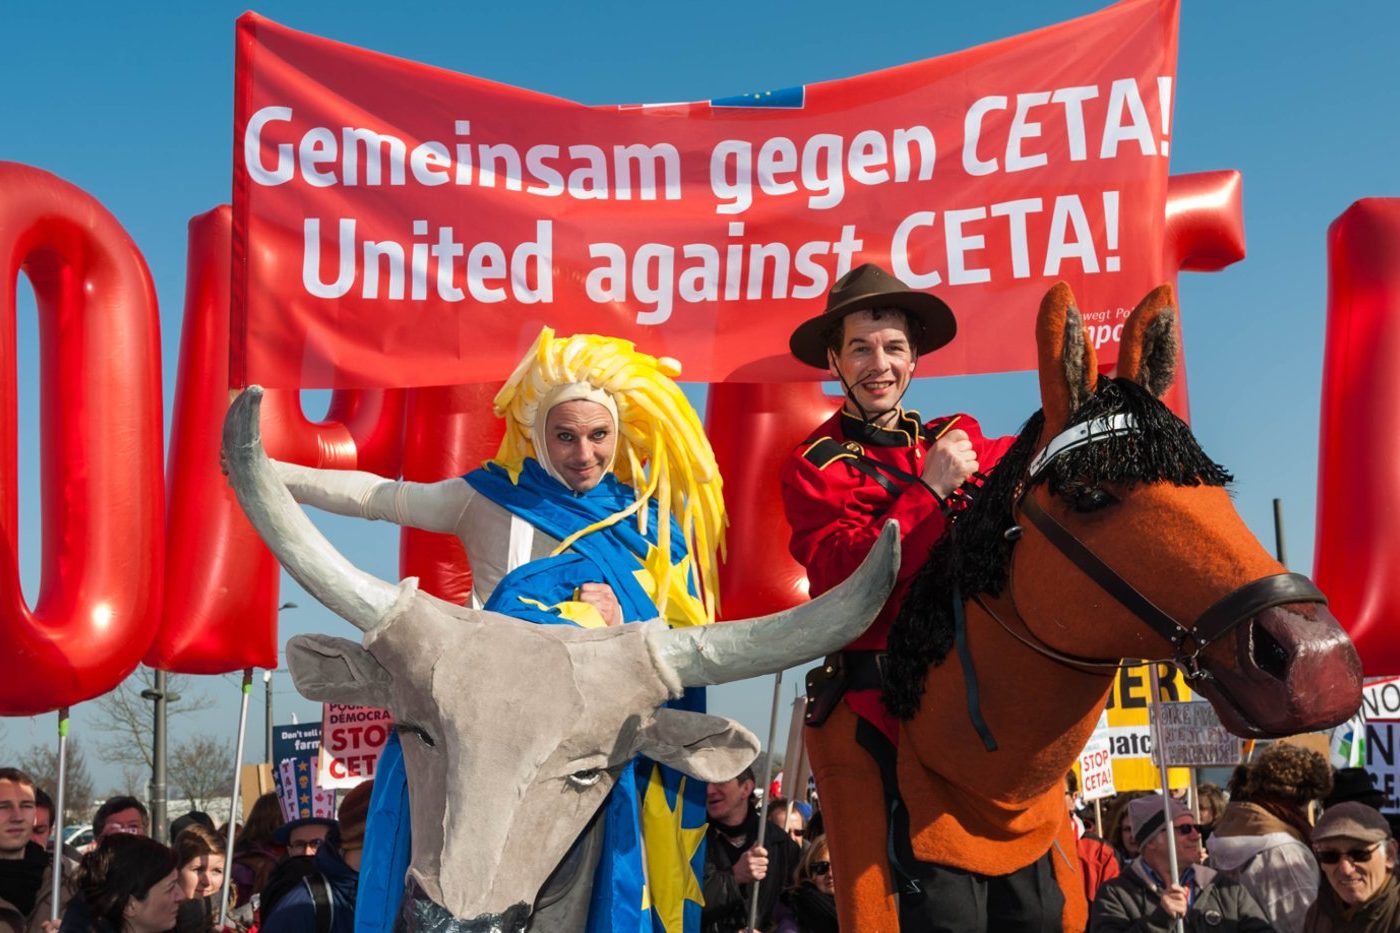 CETA stoppen. Demonstration in Straßburg / Campact e.V. [CC BY-ND 2.0]